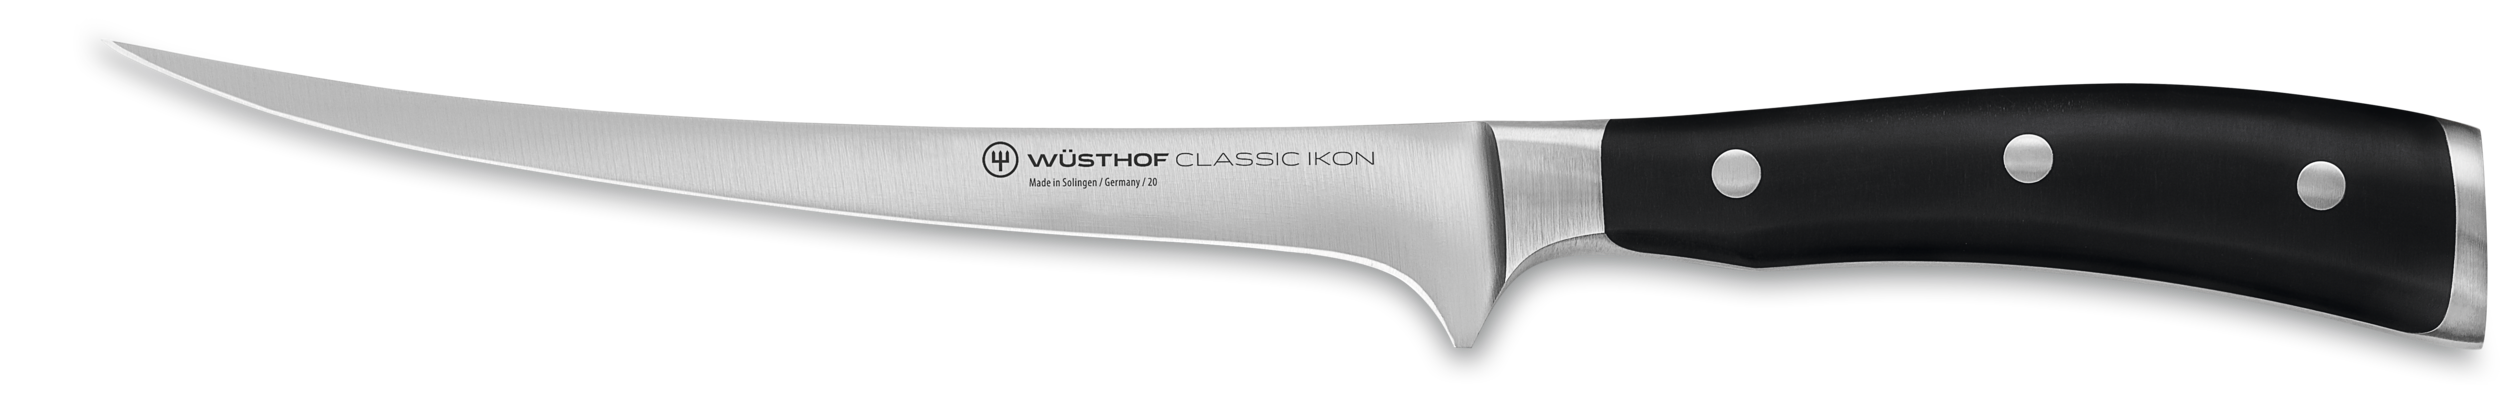 Wusthof Germany - Classic - Fish fillet knife 18cm - 1040103818